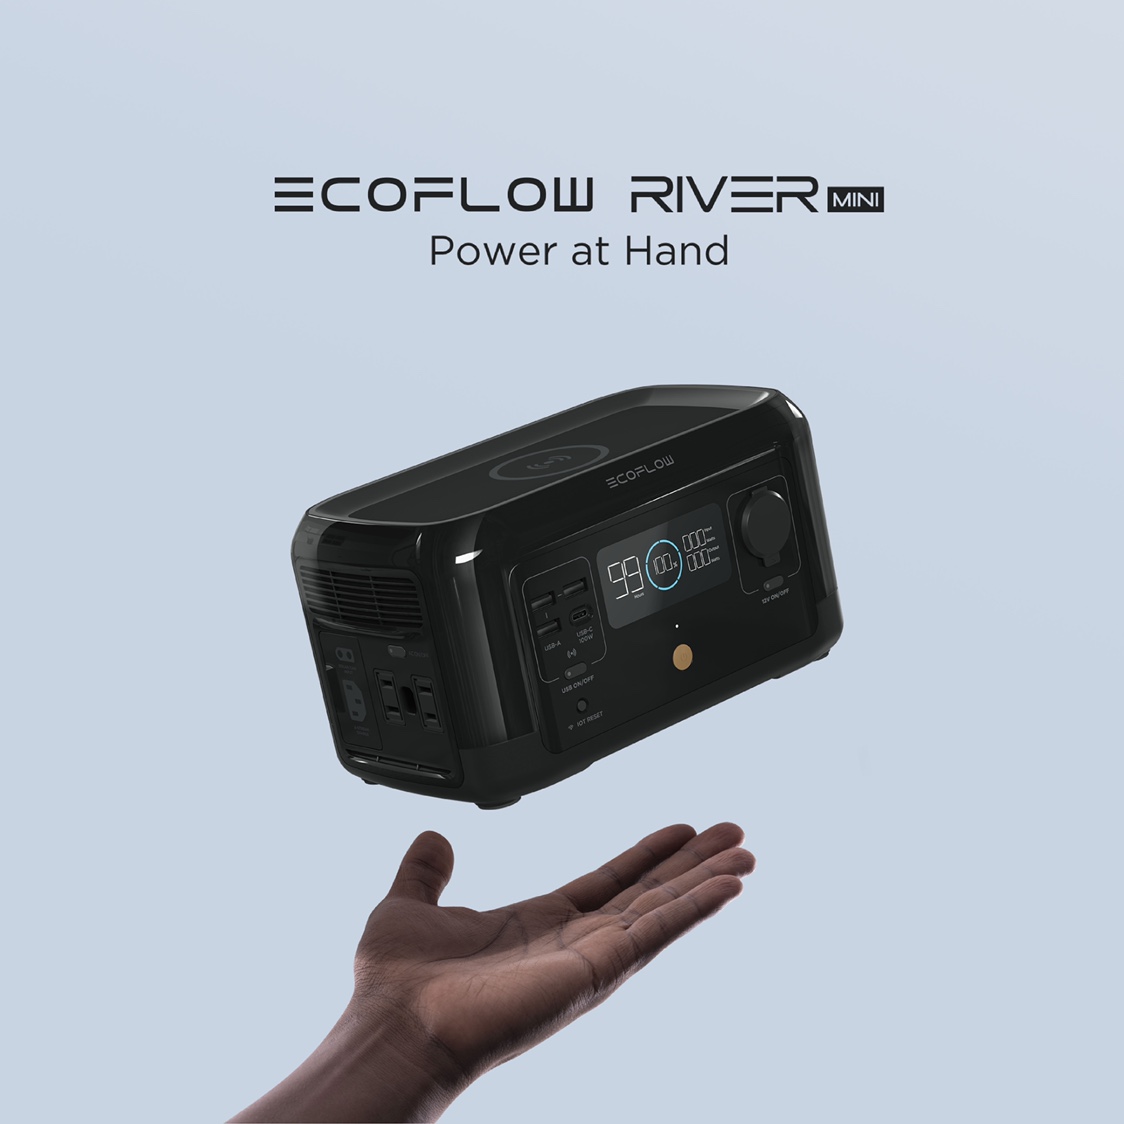 1. EcoFlow RIVER mini Power at Hand